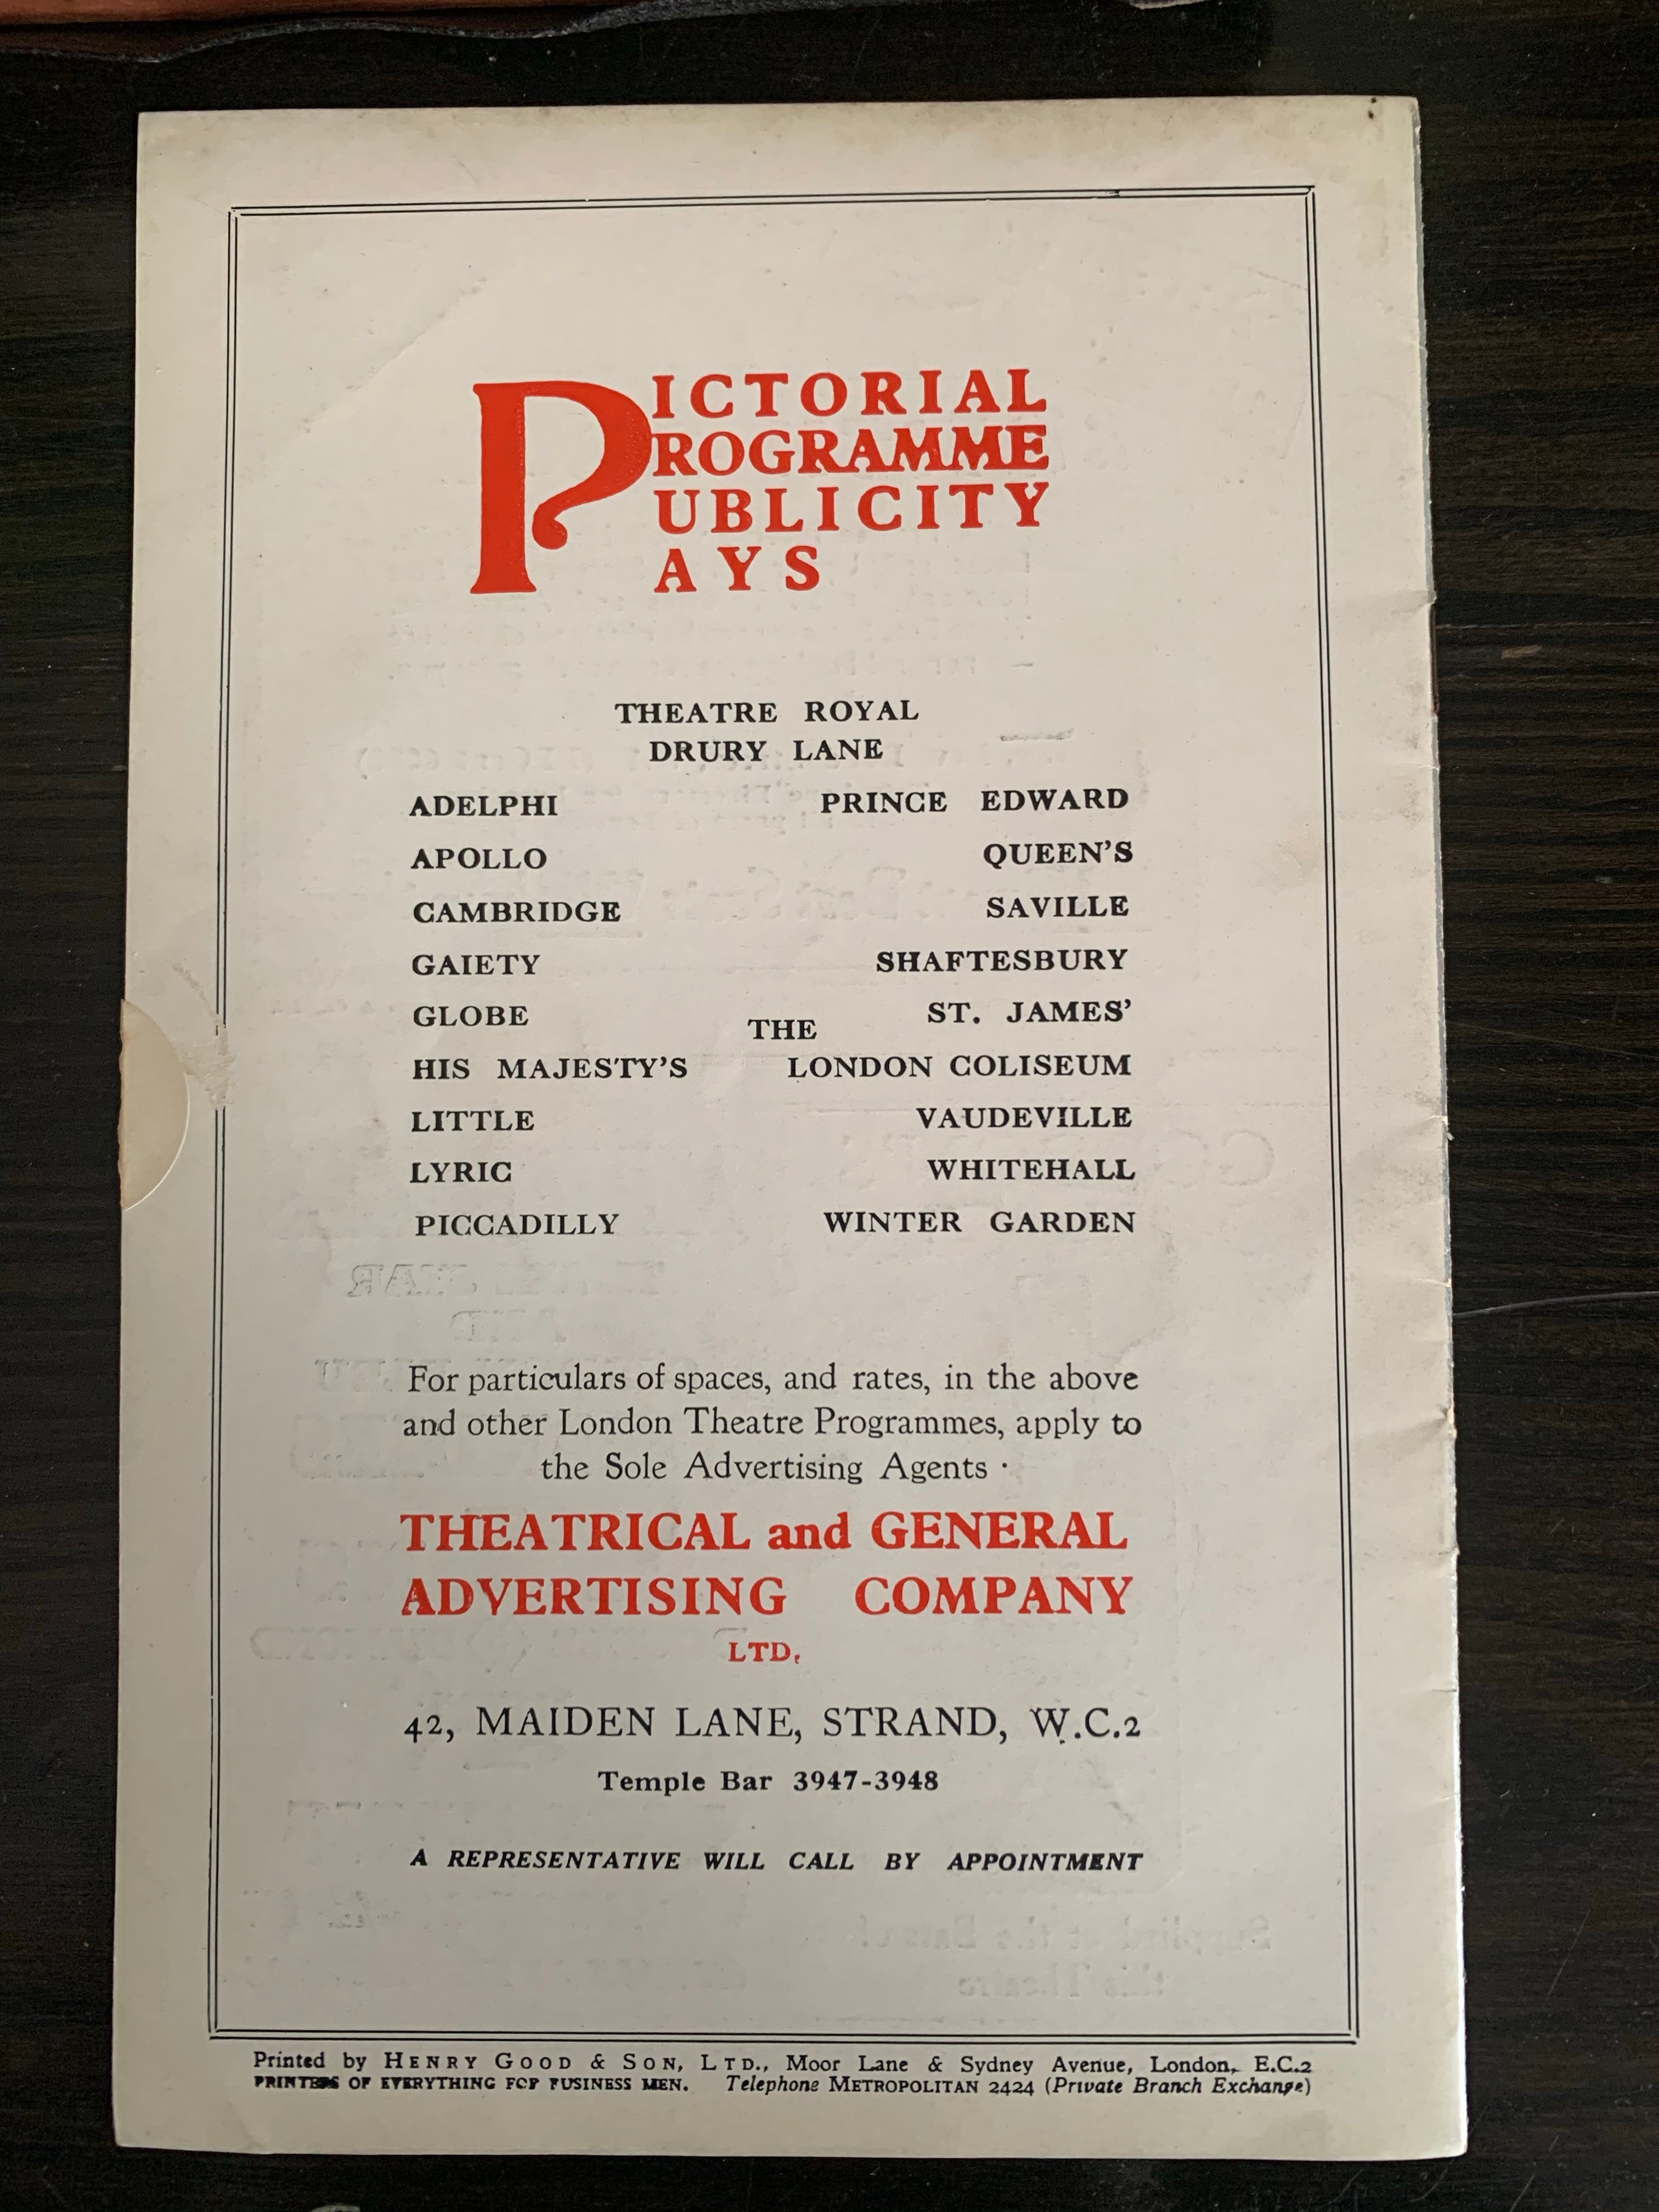 1930s Theatre Programme